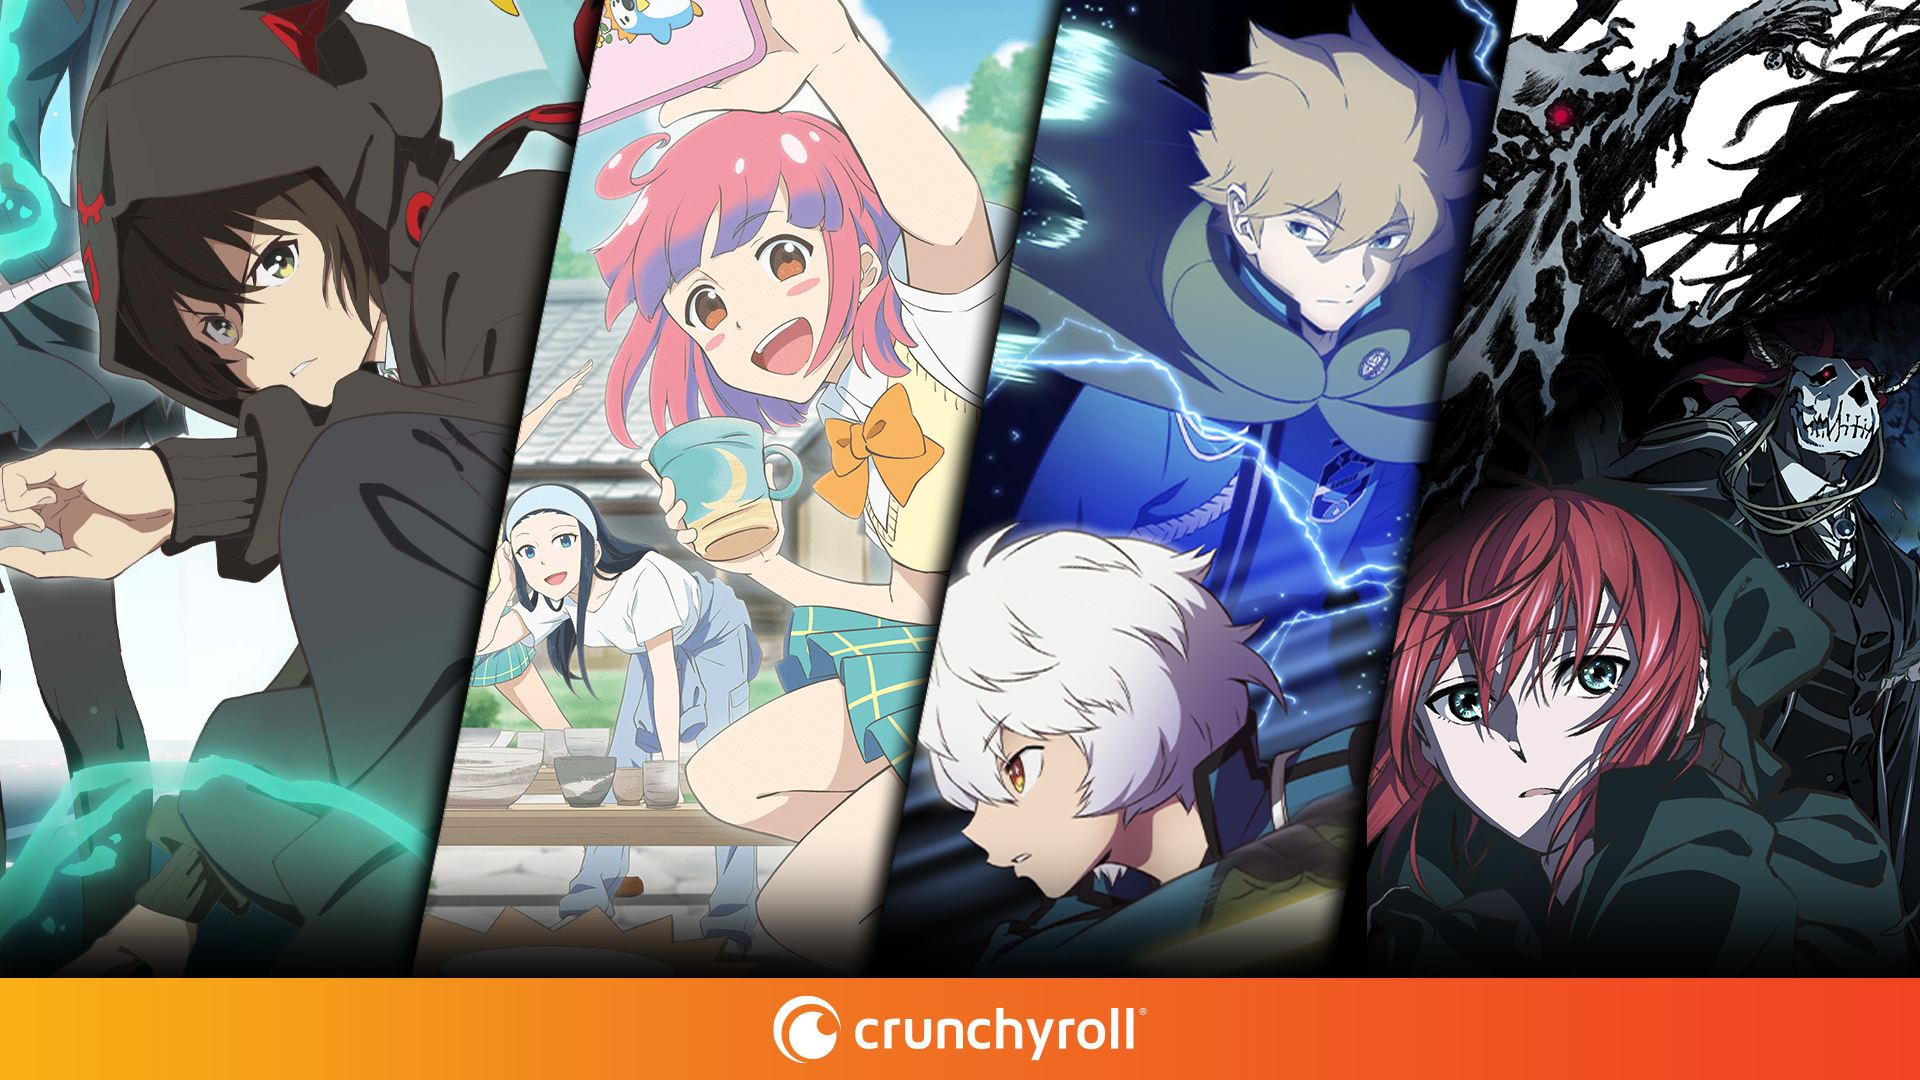  Crunchyroll anuncia cinco novos animes para a  temporada de abril